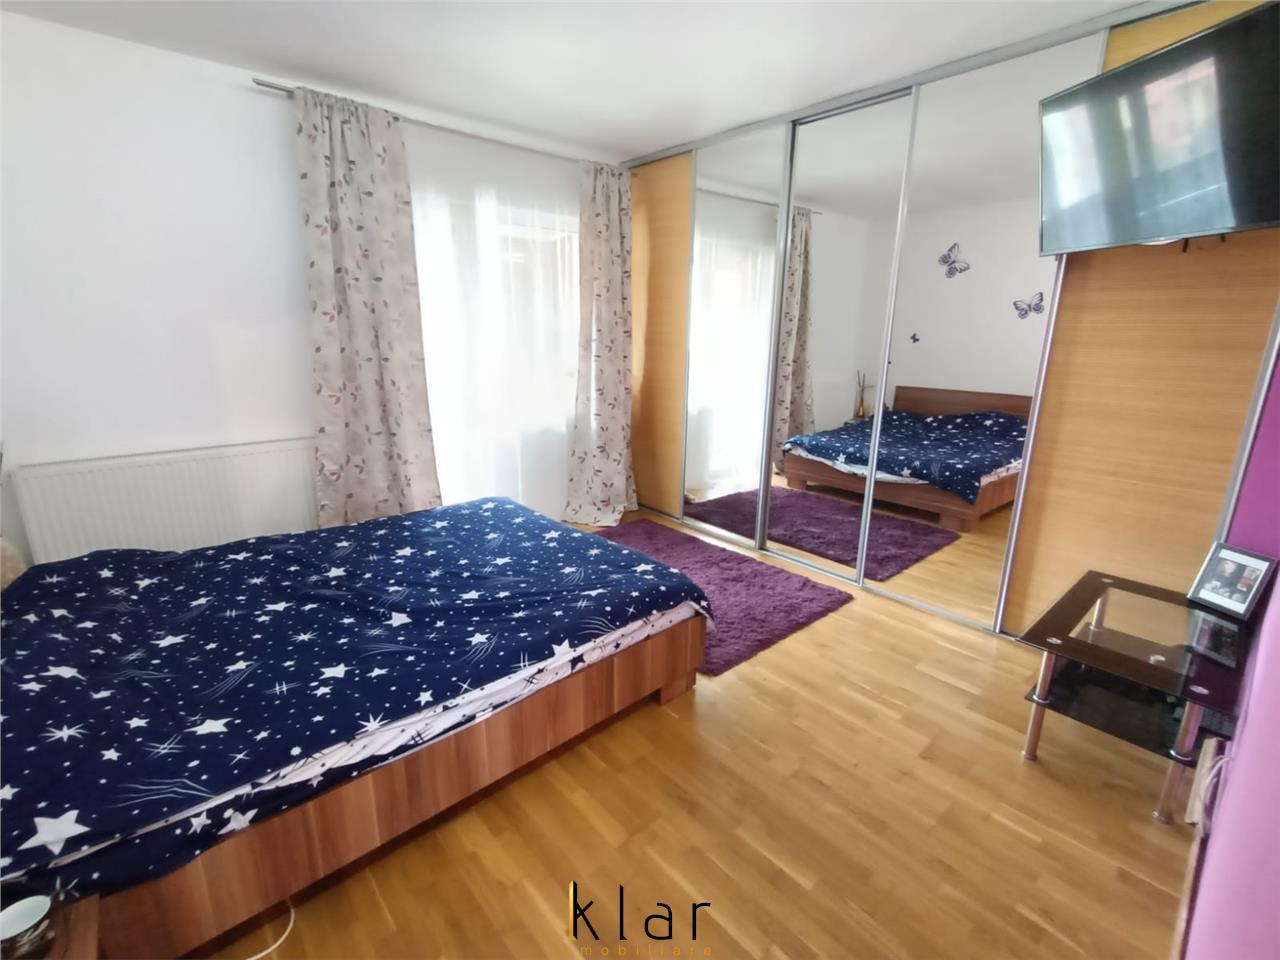 Apartament 3 camere, 69 mp, mobilat utilat, zona Eroilor -Avram Iancu!